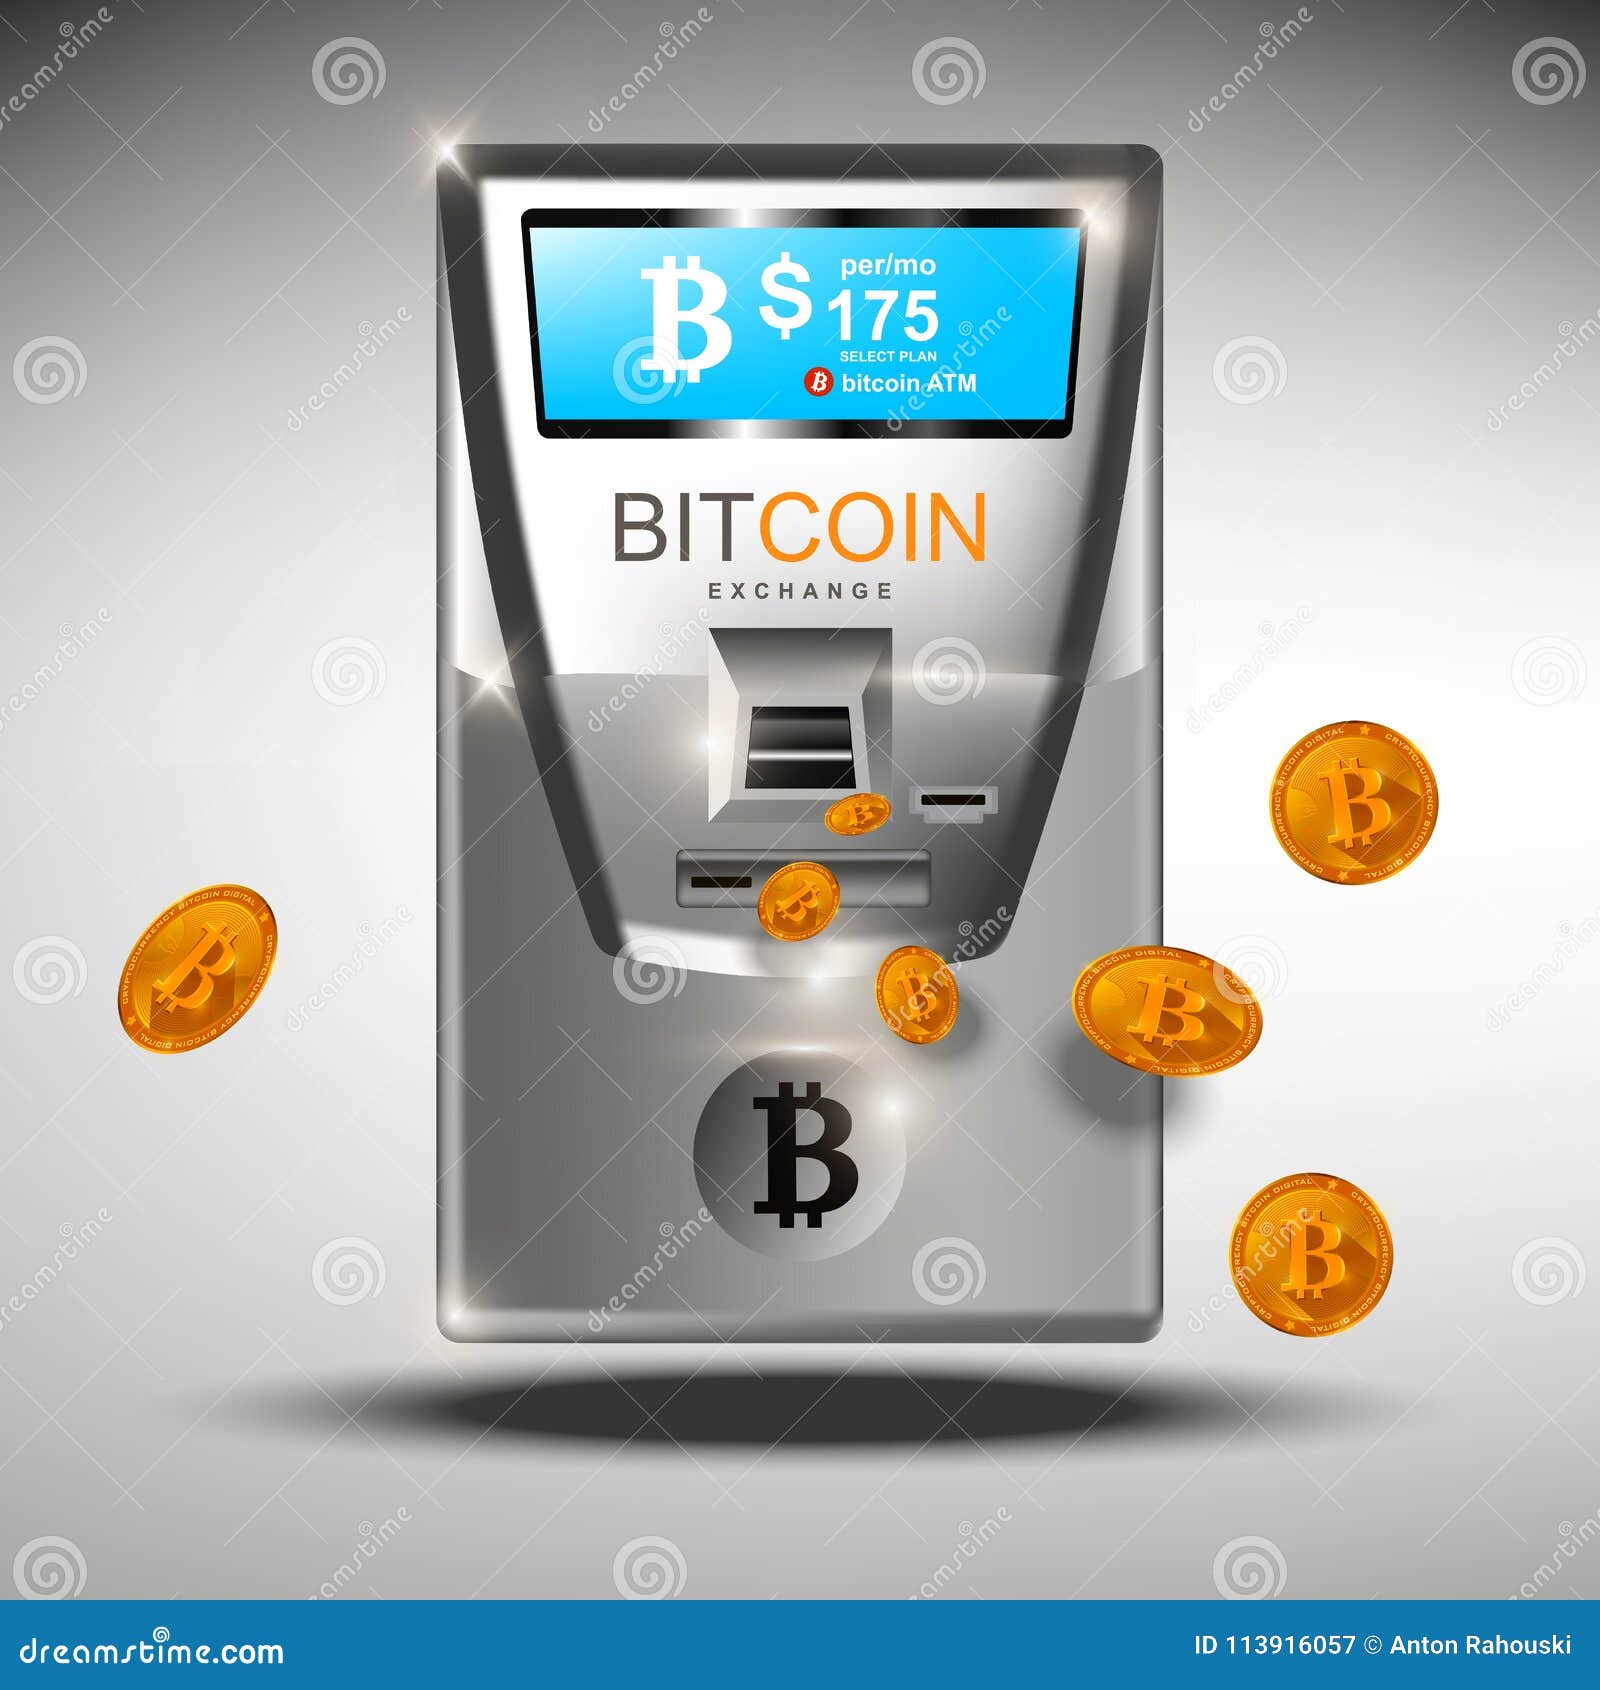 Bitcoin ATM Automated Machine. ATM Bitcoins Cash Machine ...